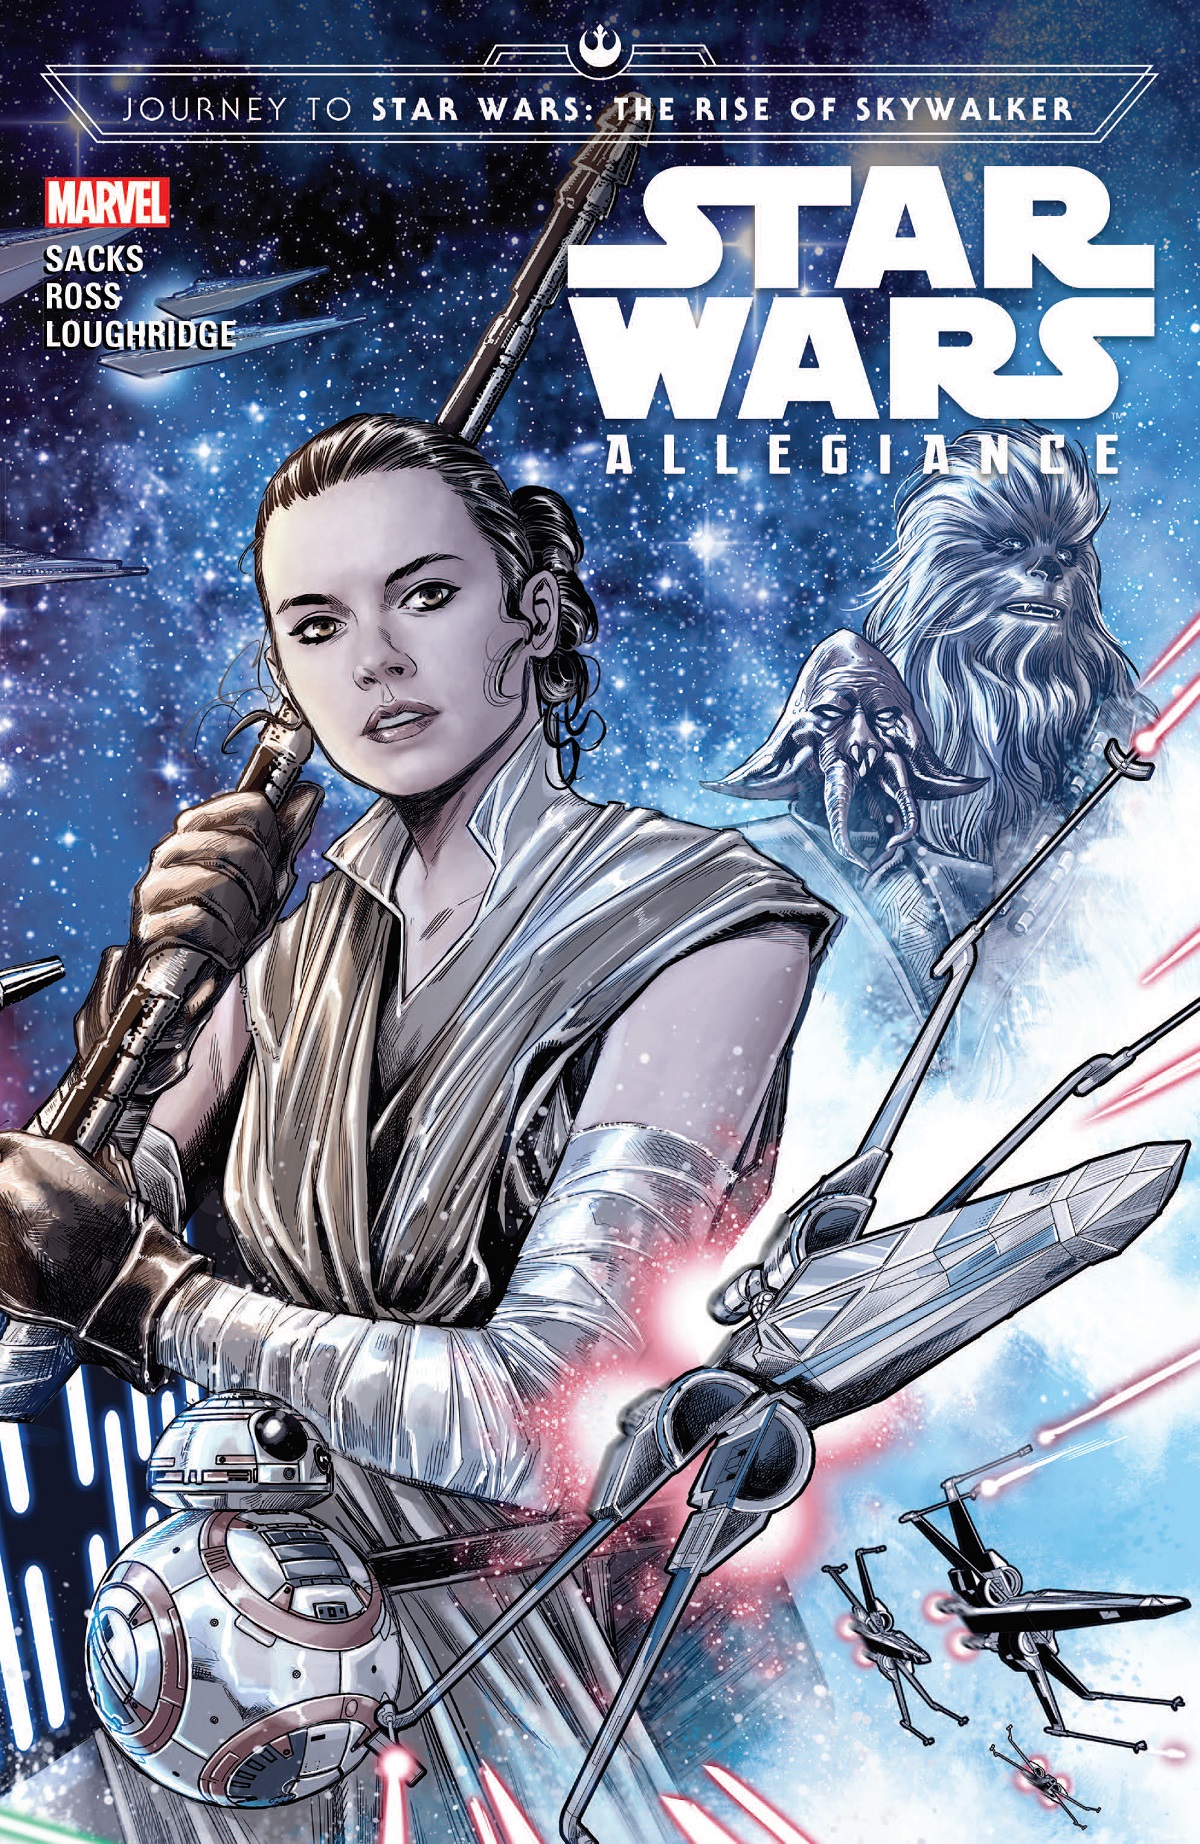 Journey To Star Wars: The Rise Of Skywalker - Allegiance (Trade Paperback)